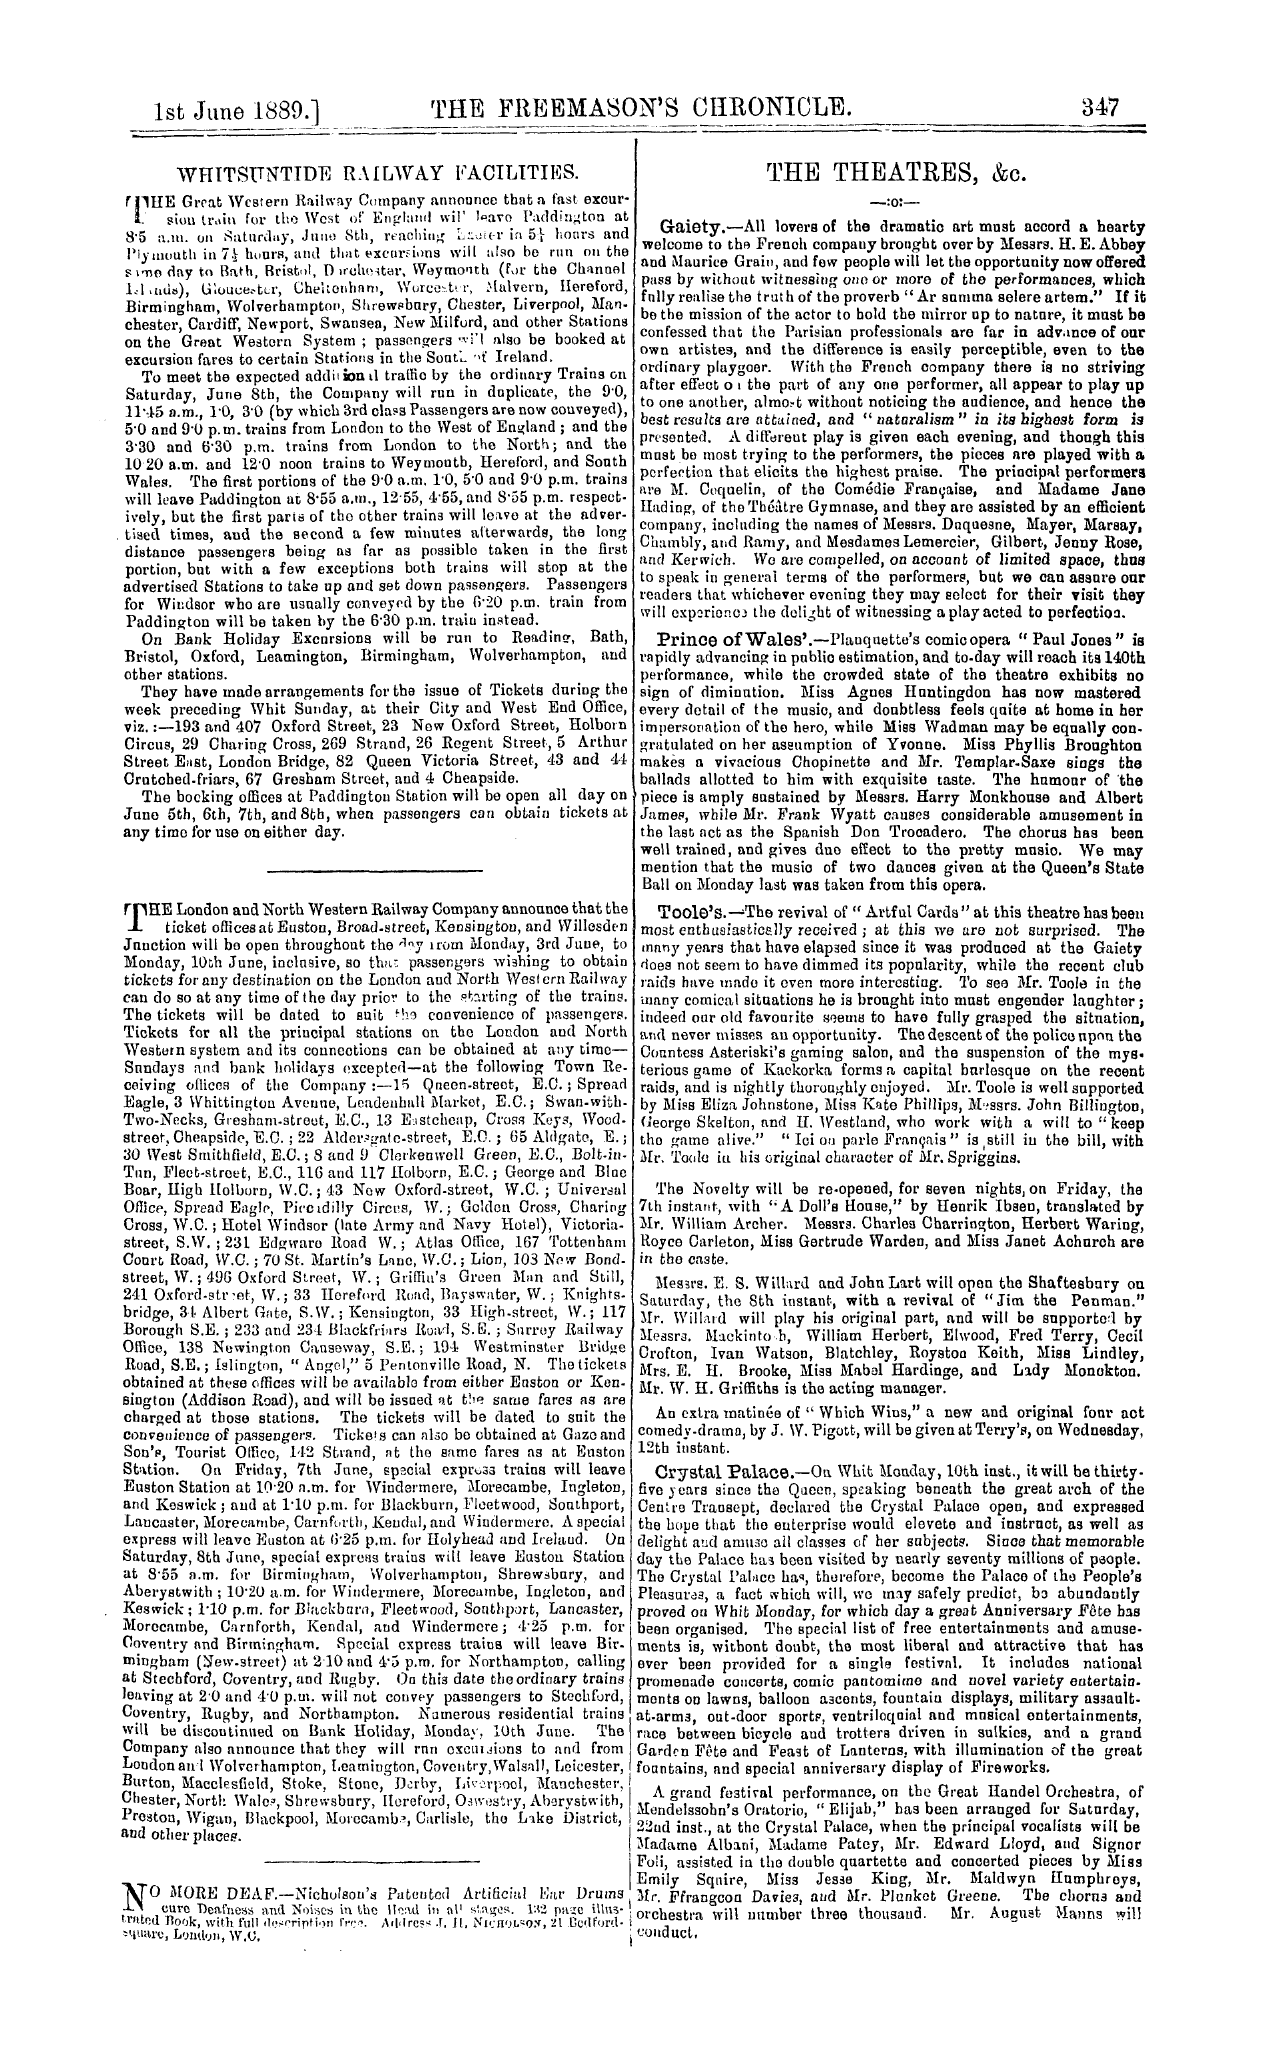 The Freemason's Chronicle: 1889-06-01 - Whitsuntide Railway Facilities.